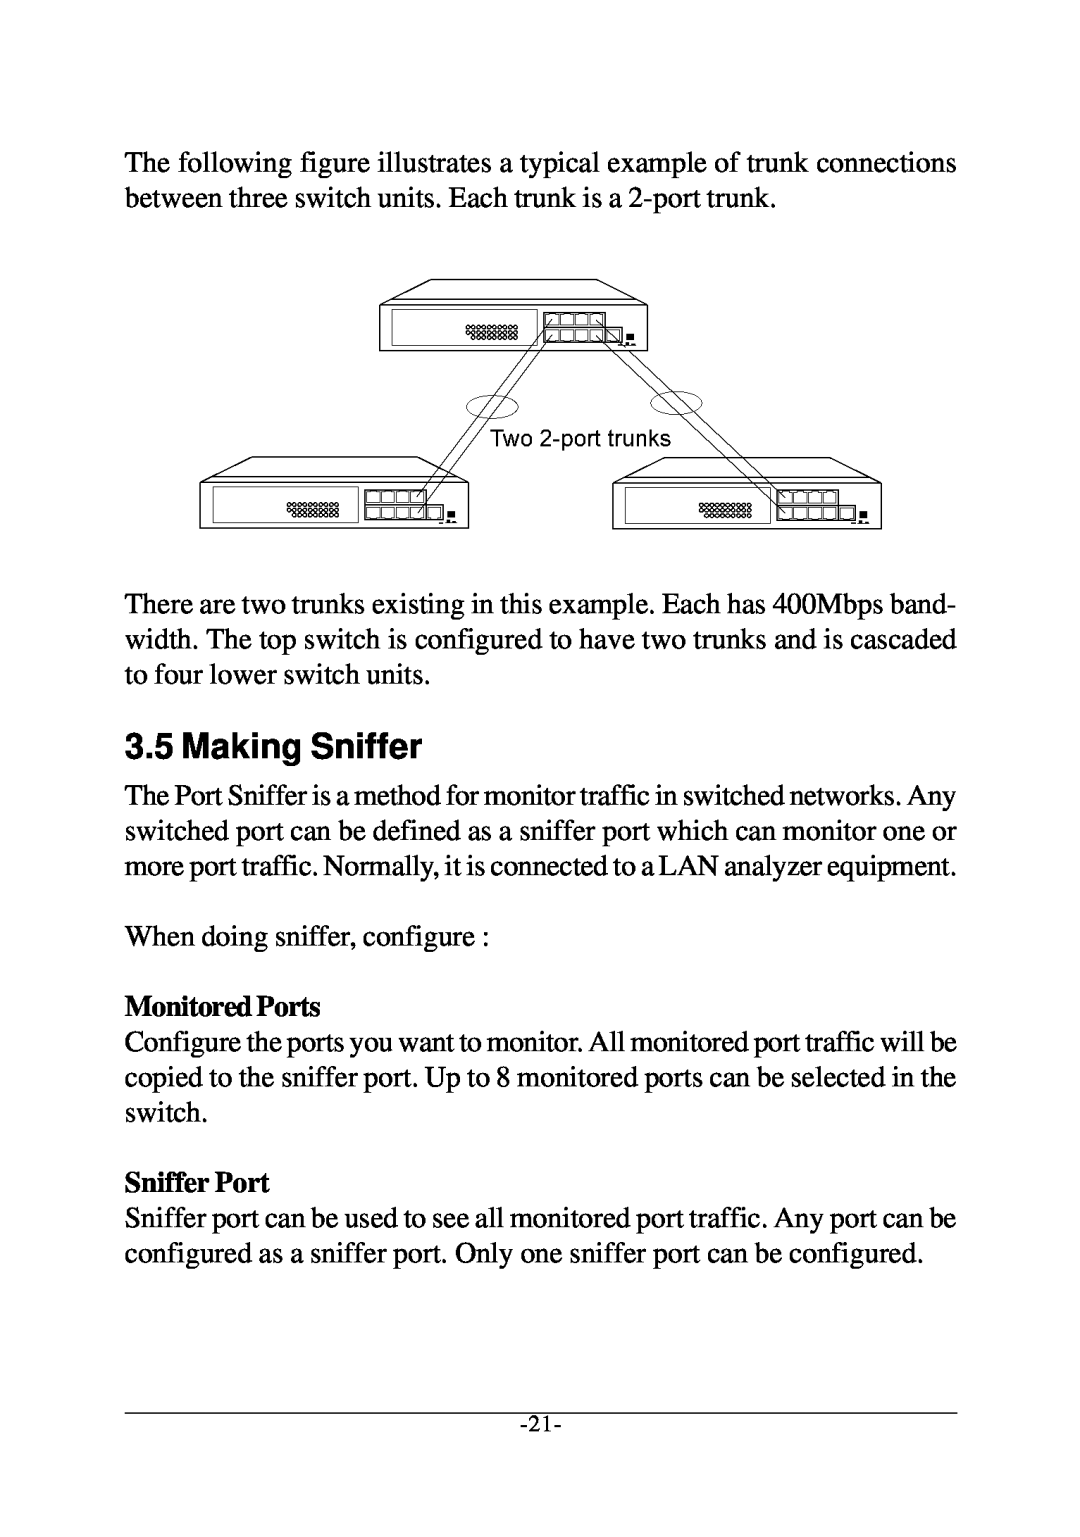 Xerox KS-801 operation manual Making Sniffer, Monitored Ports, Sniffer Port 